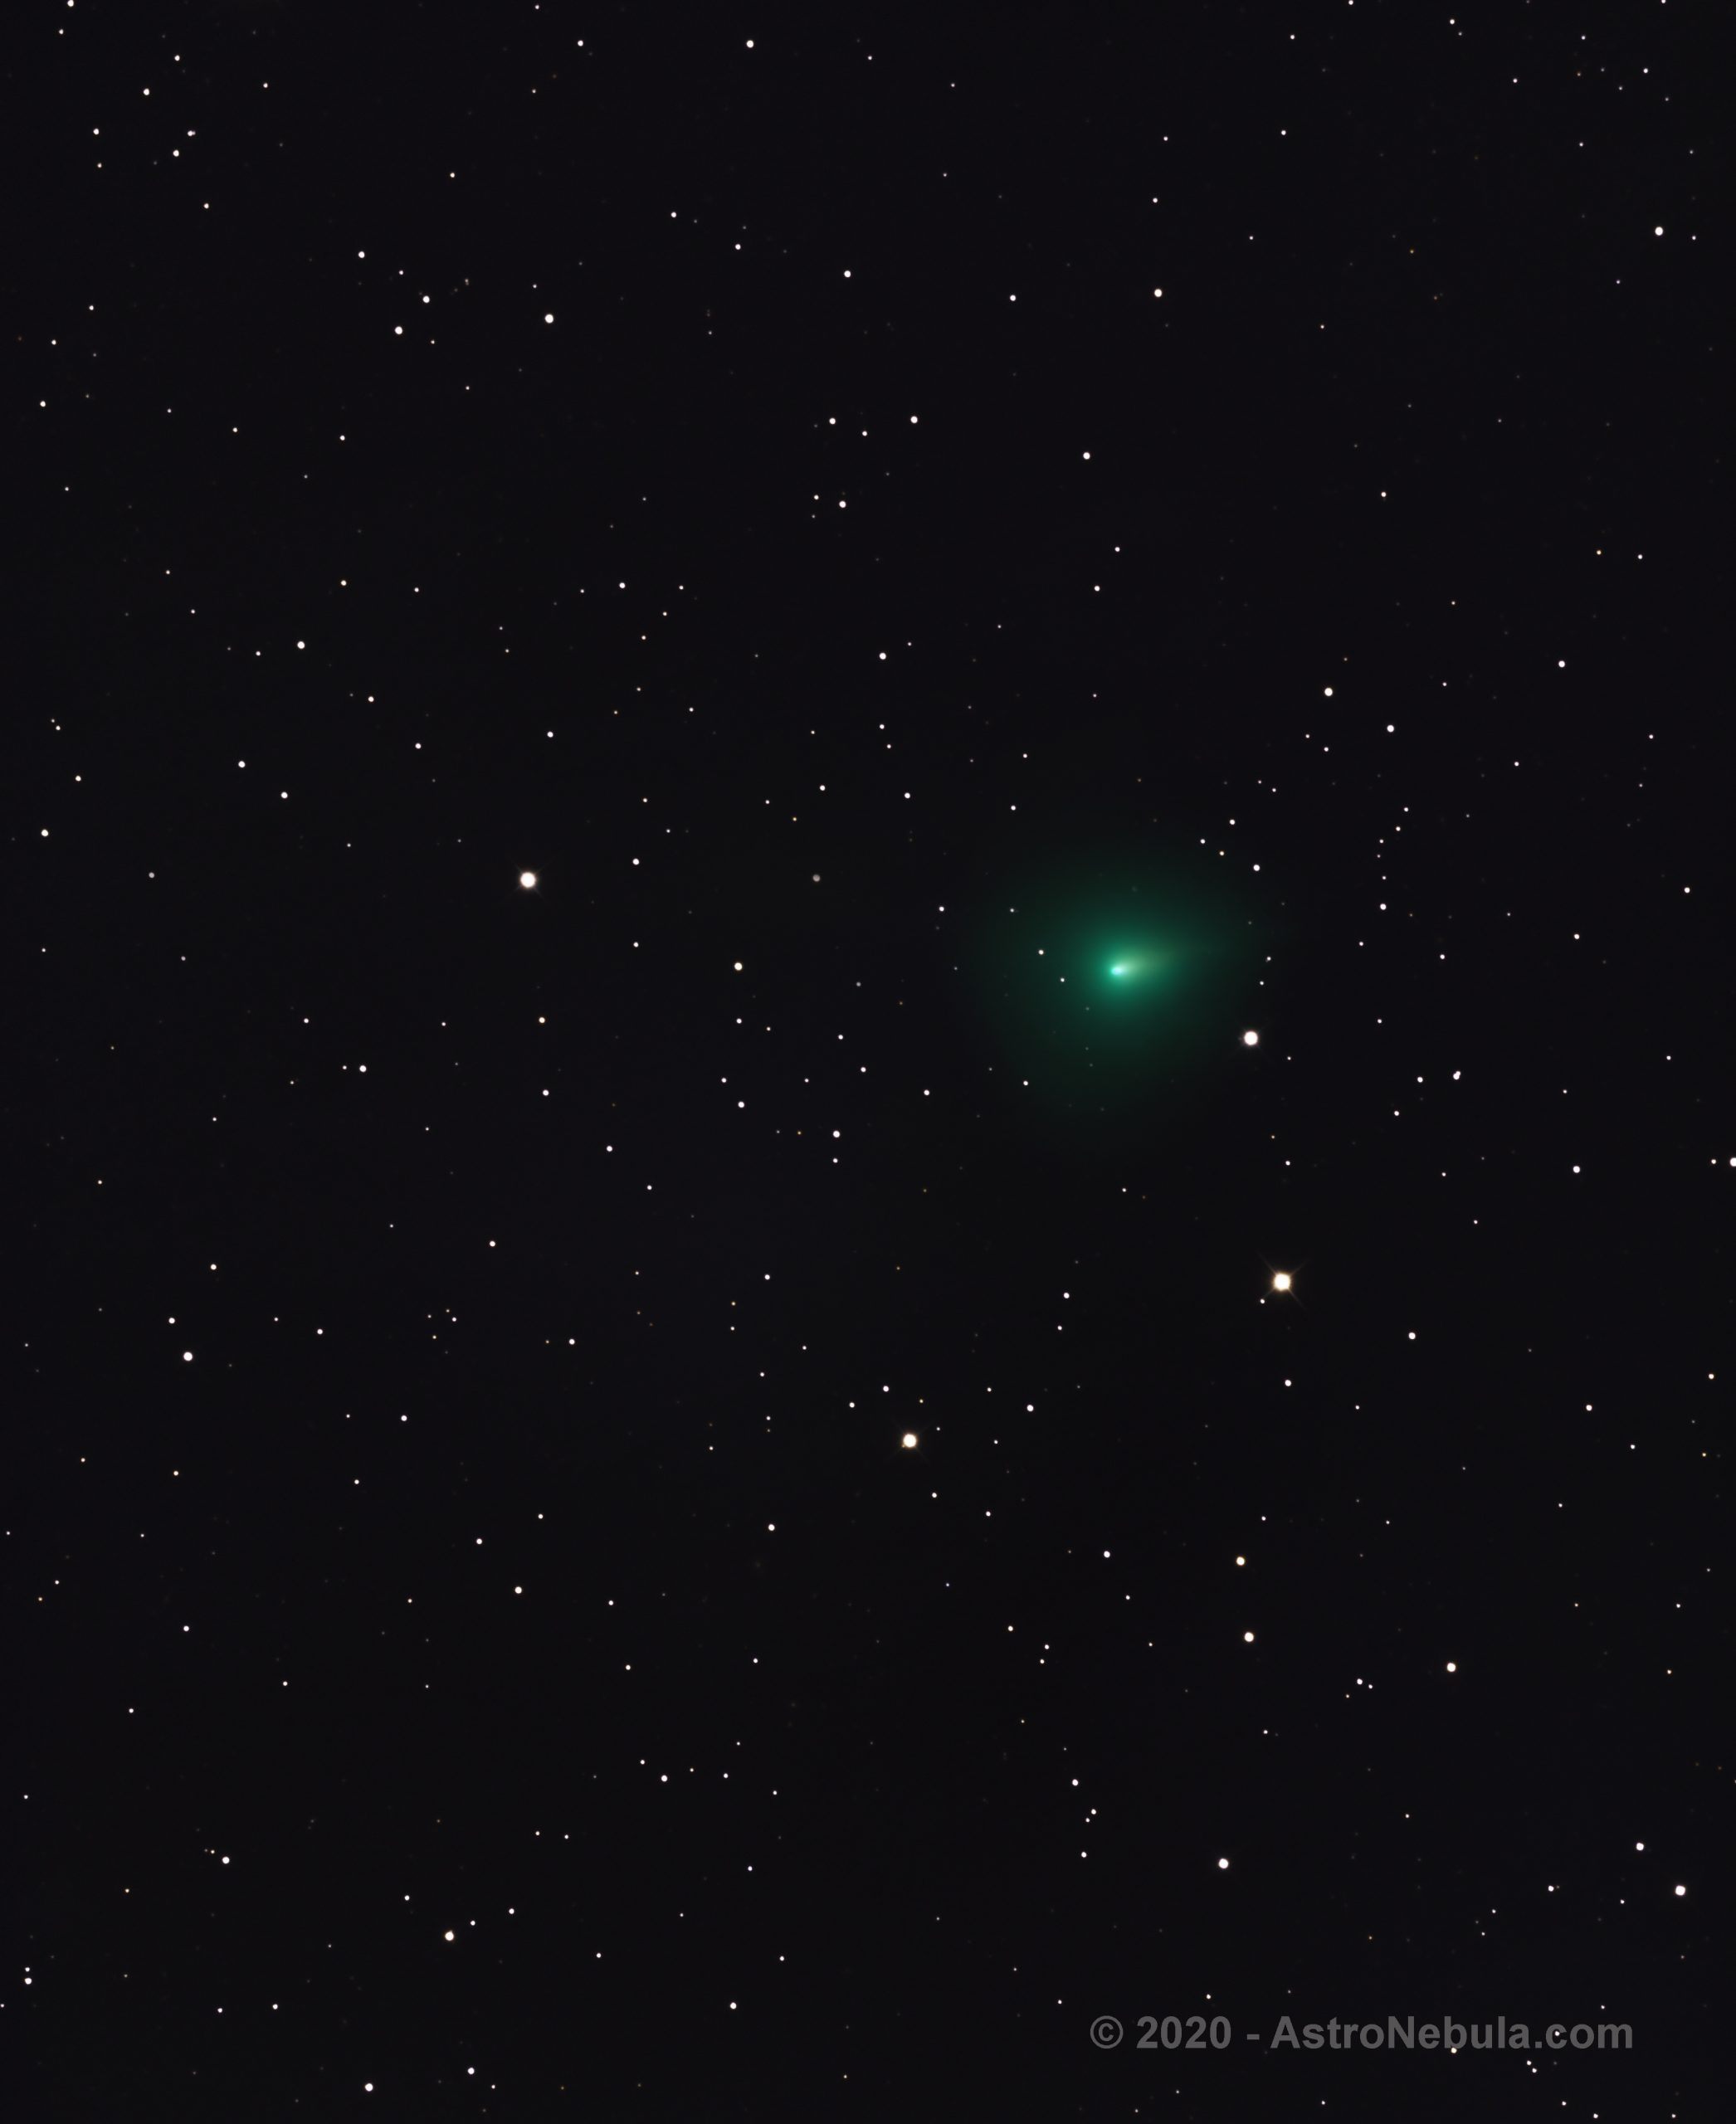 Comet Atlas C 2019 Y4 Shows It's Comet Tail